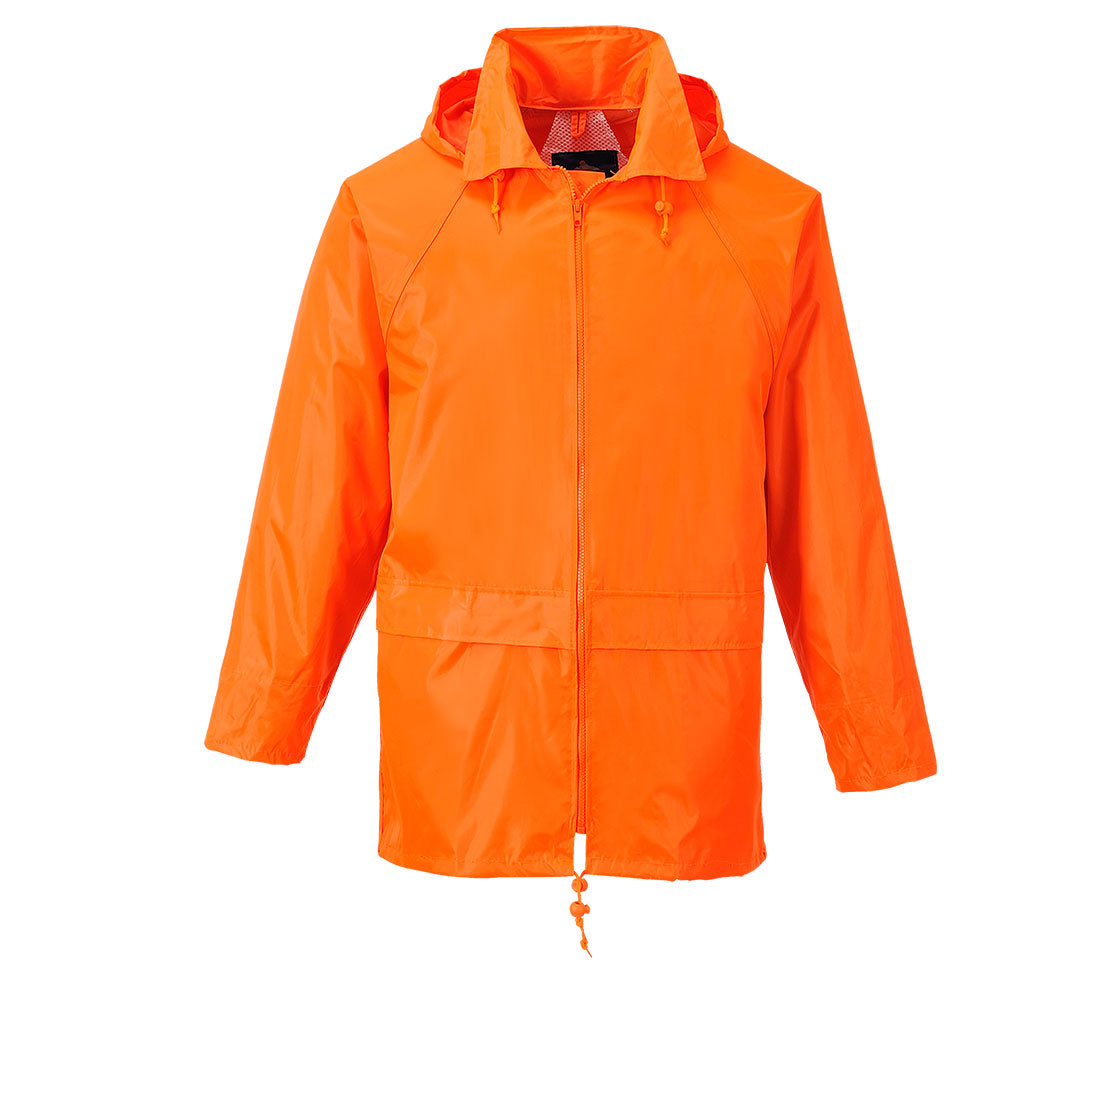 Portwest S440 Orange Sz L Classic Rain Jacket Coat Waterproof Hooded Zipped